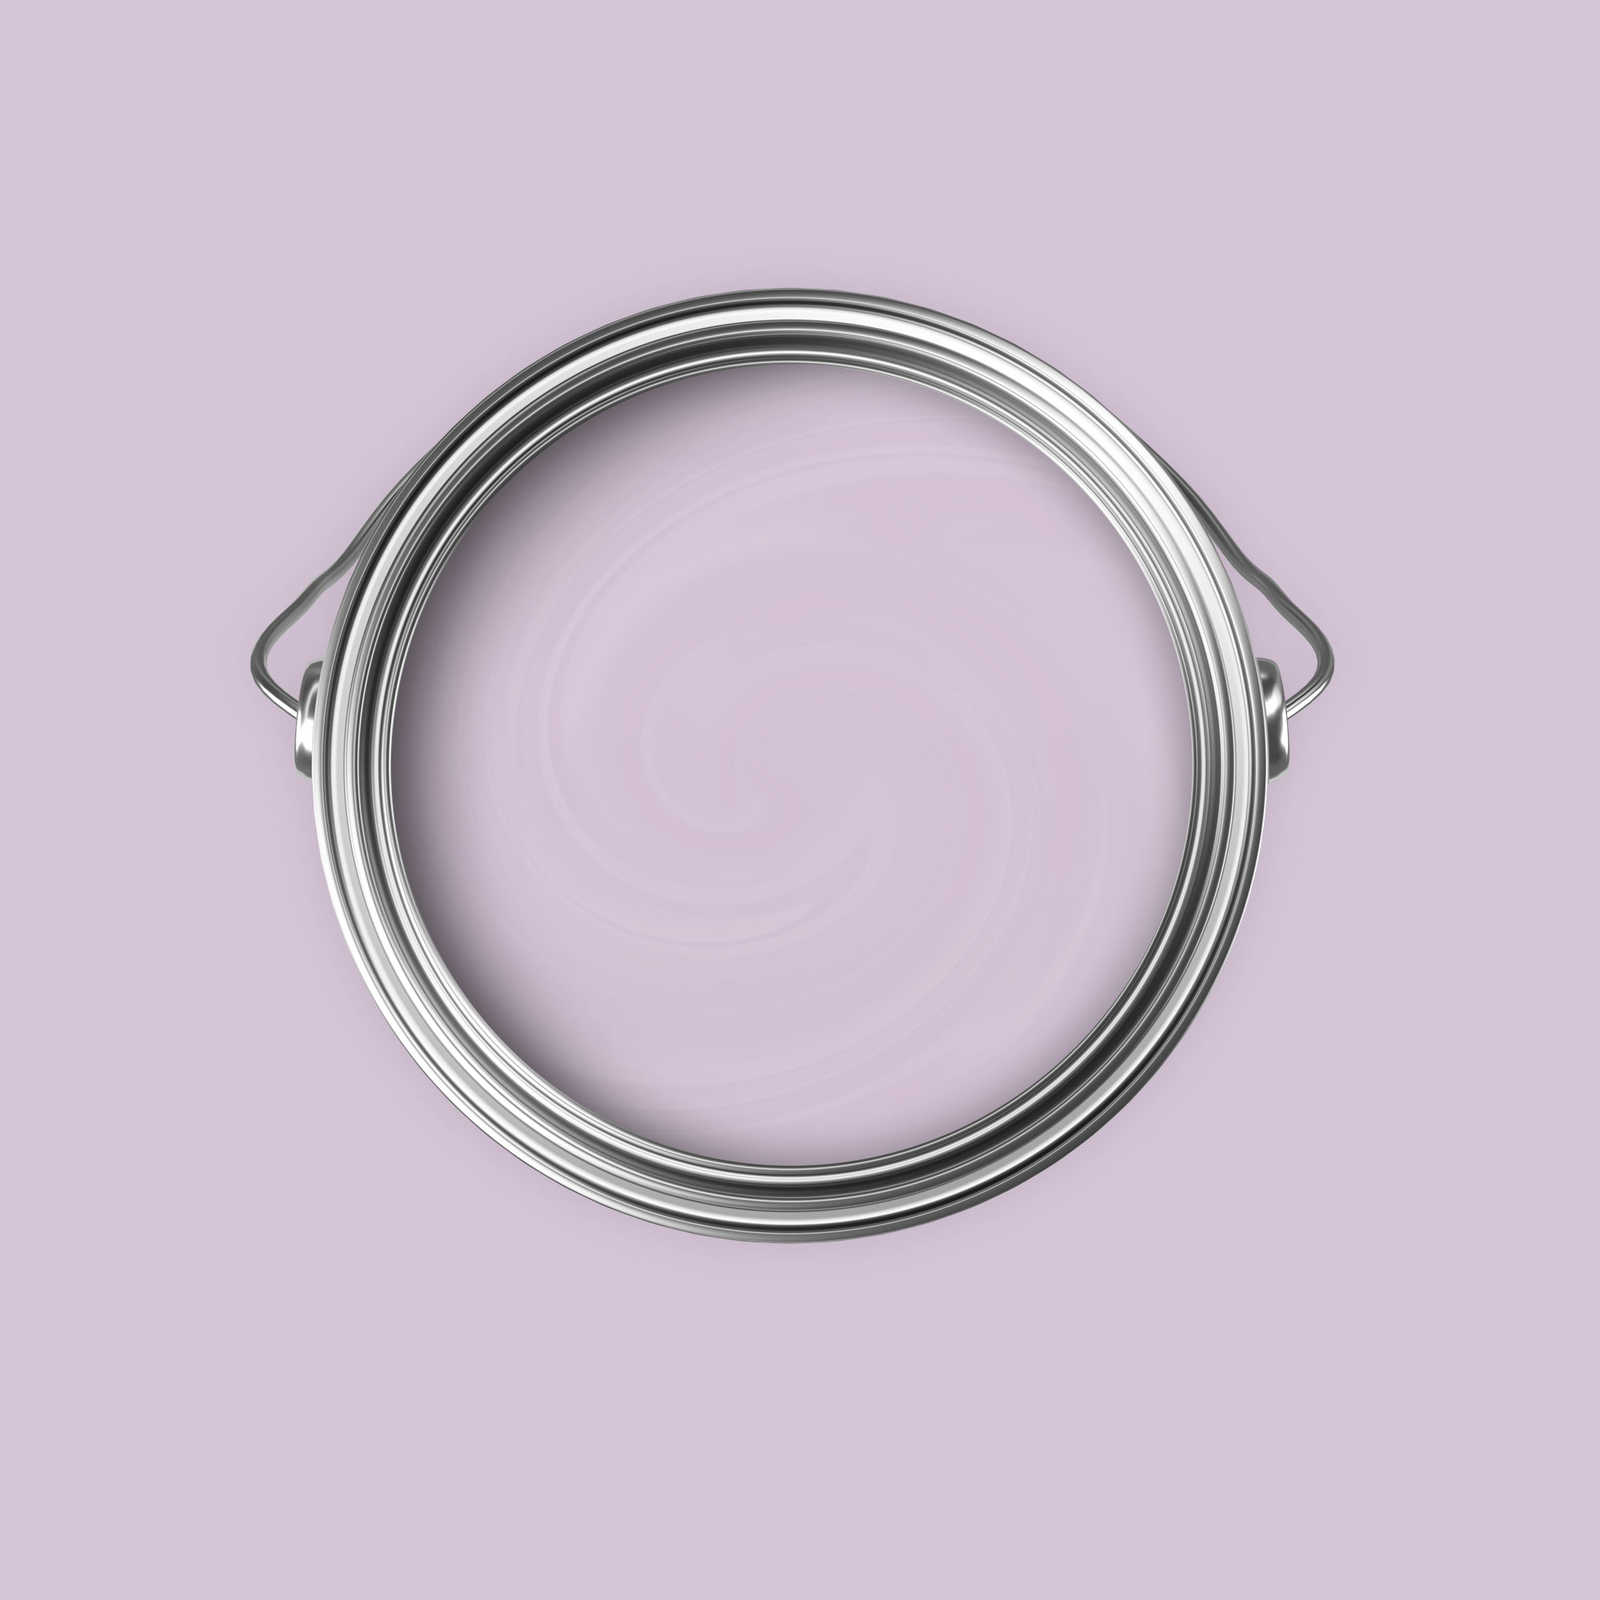             Pintura mural Premium lila delicado »Beautiful Berry« NW207 – 5 litro
        